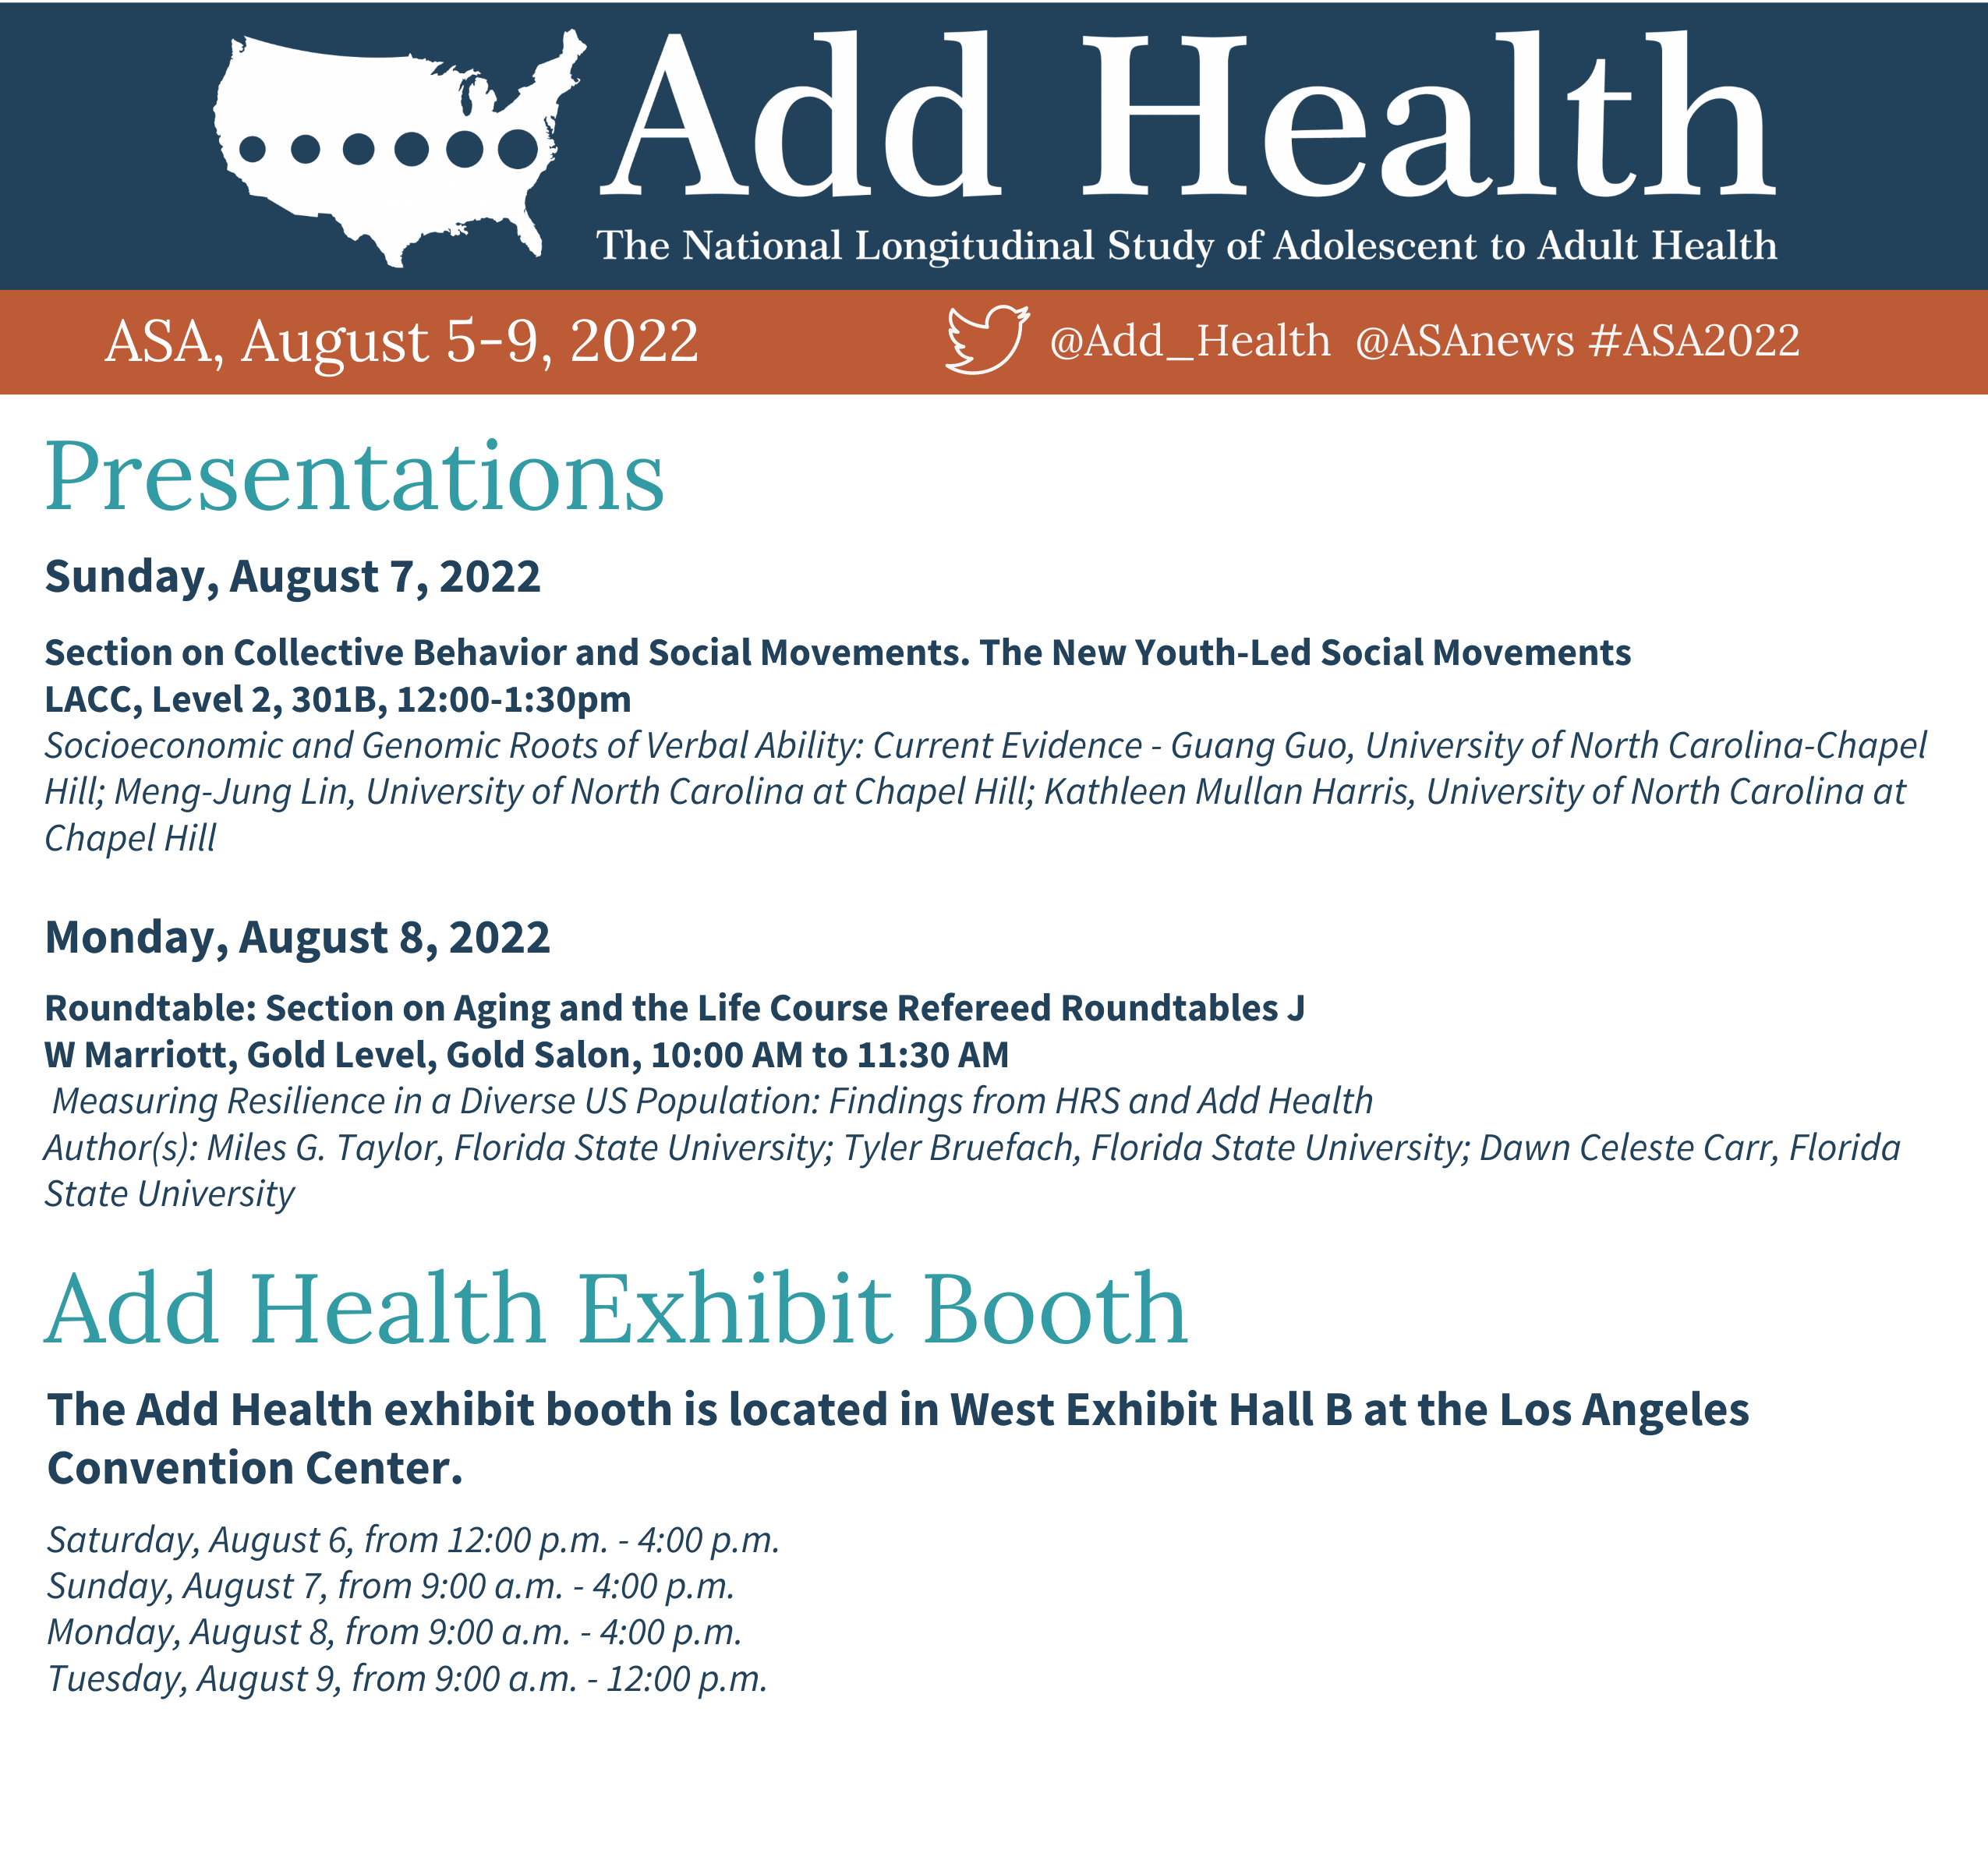 Add Health Presentations at ASA 2022